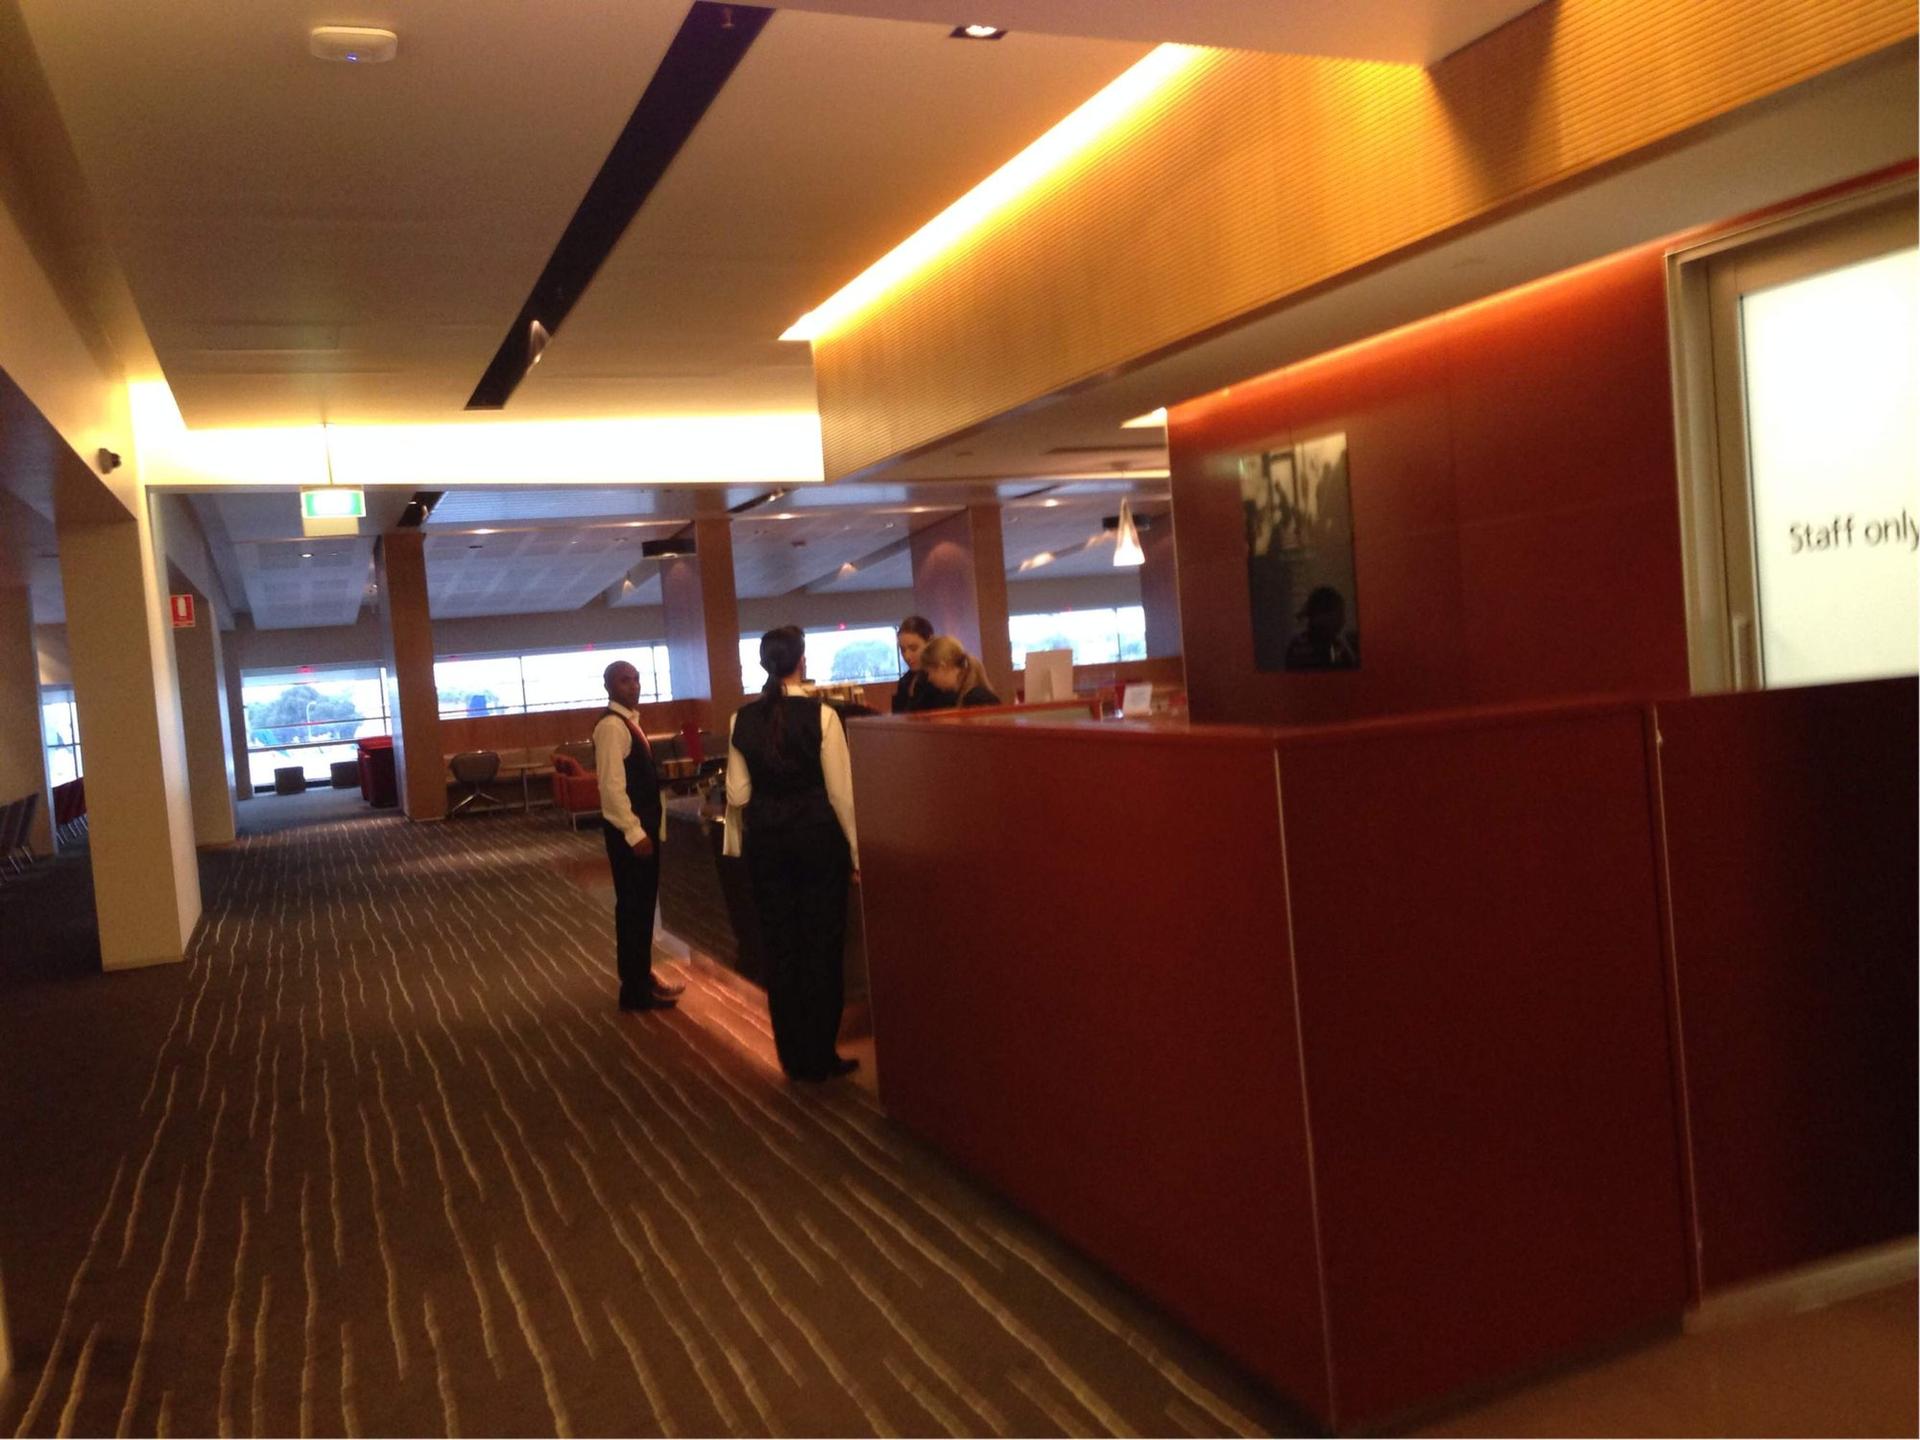 Qantas Club (International Business Lounge) image 6 of 6